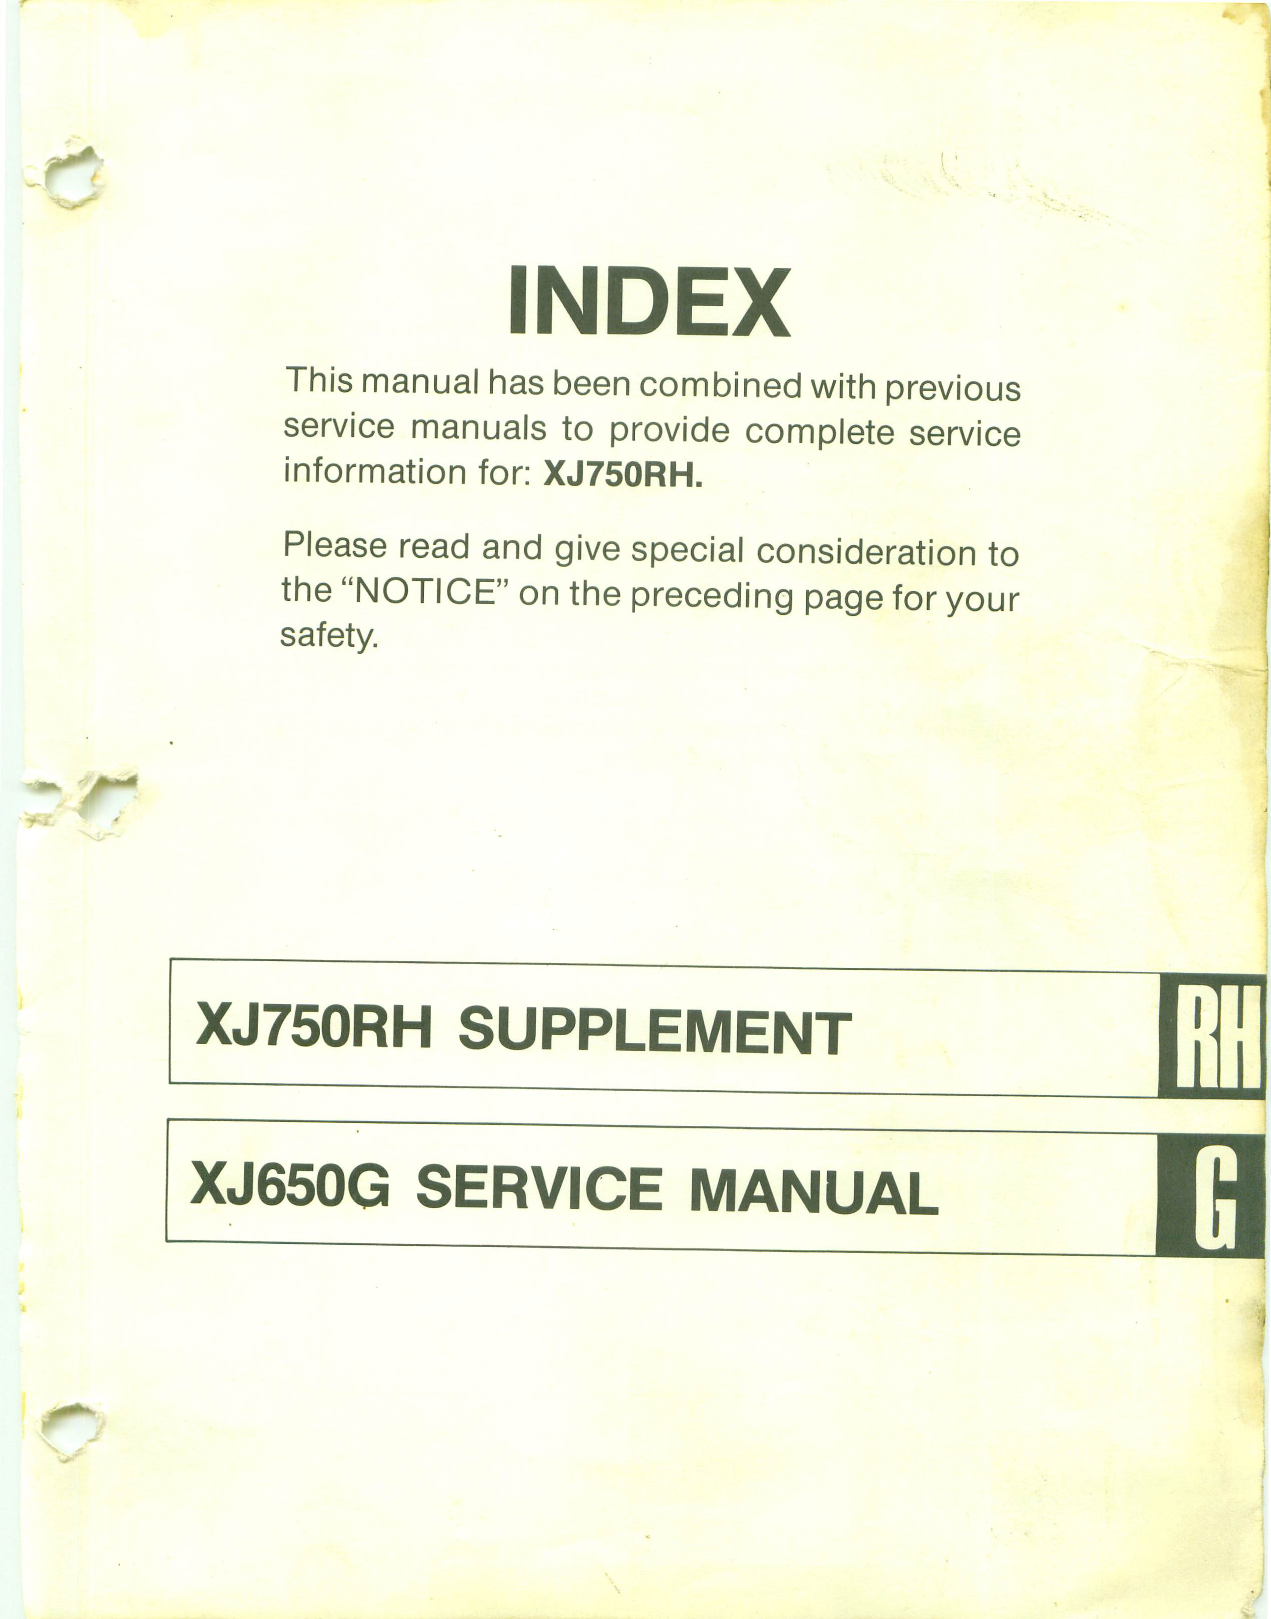 1980-1986 Yamaha XJ750RH repair and service manual Preview image 3